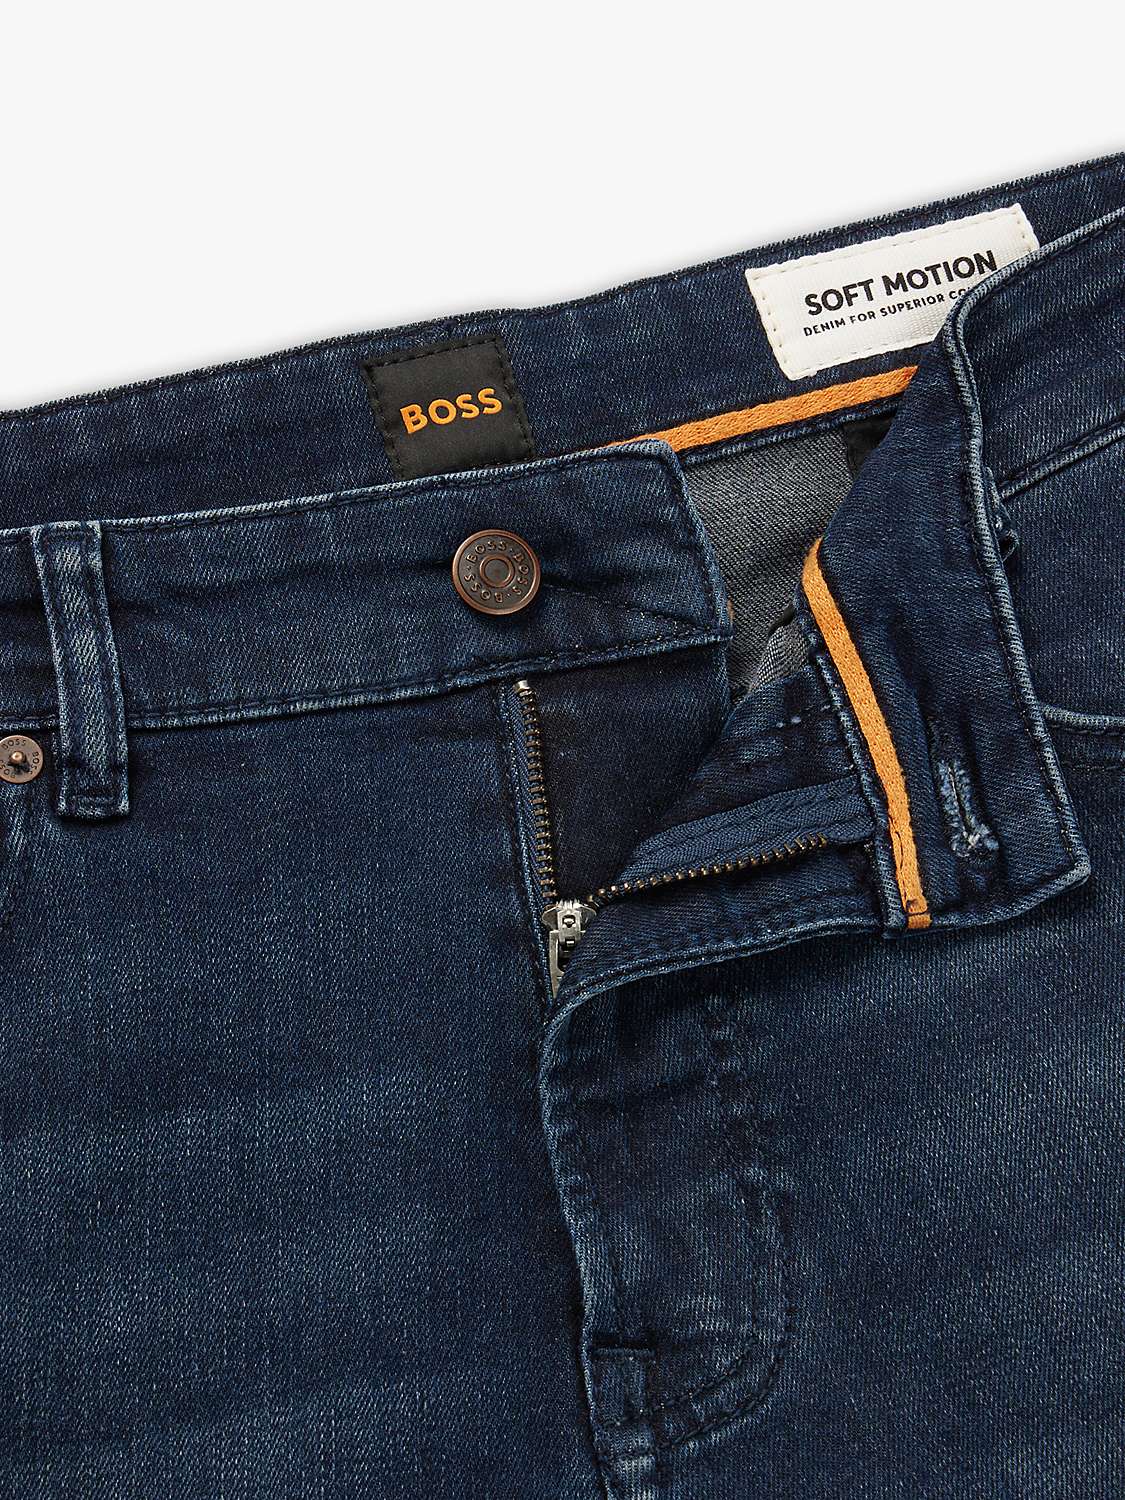 Buy BOSS Maine Regular Fit Jeans, Navy Online at johnlewis.com